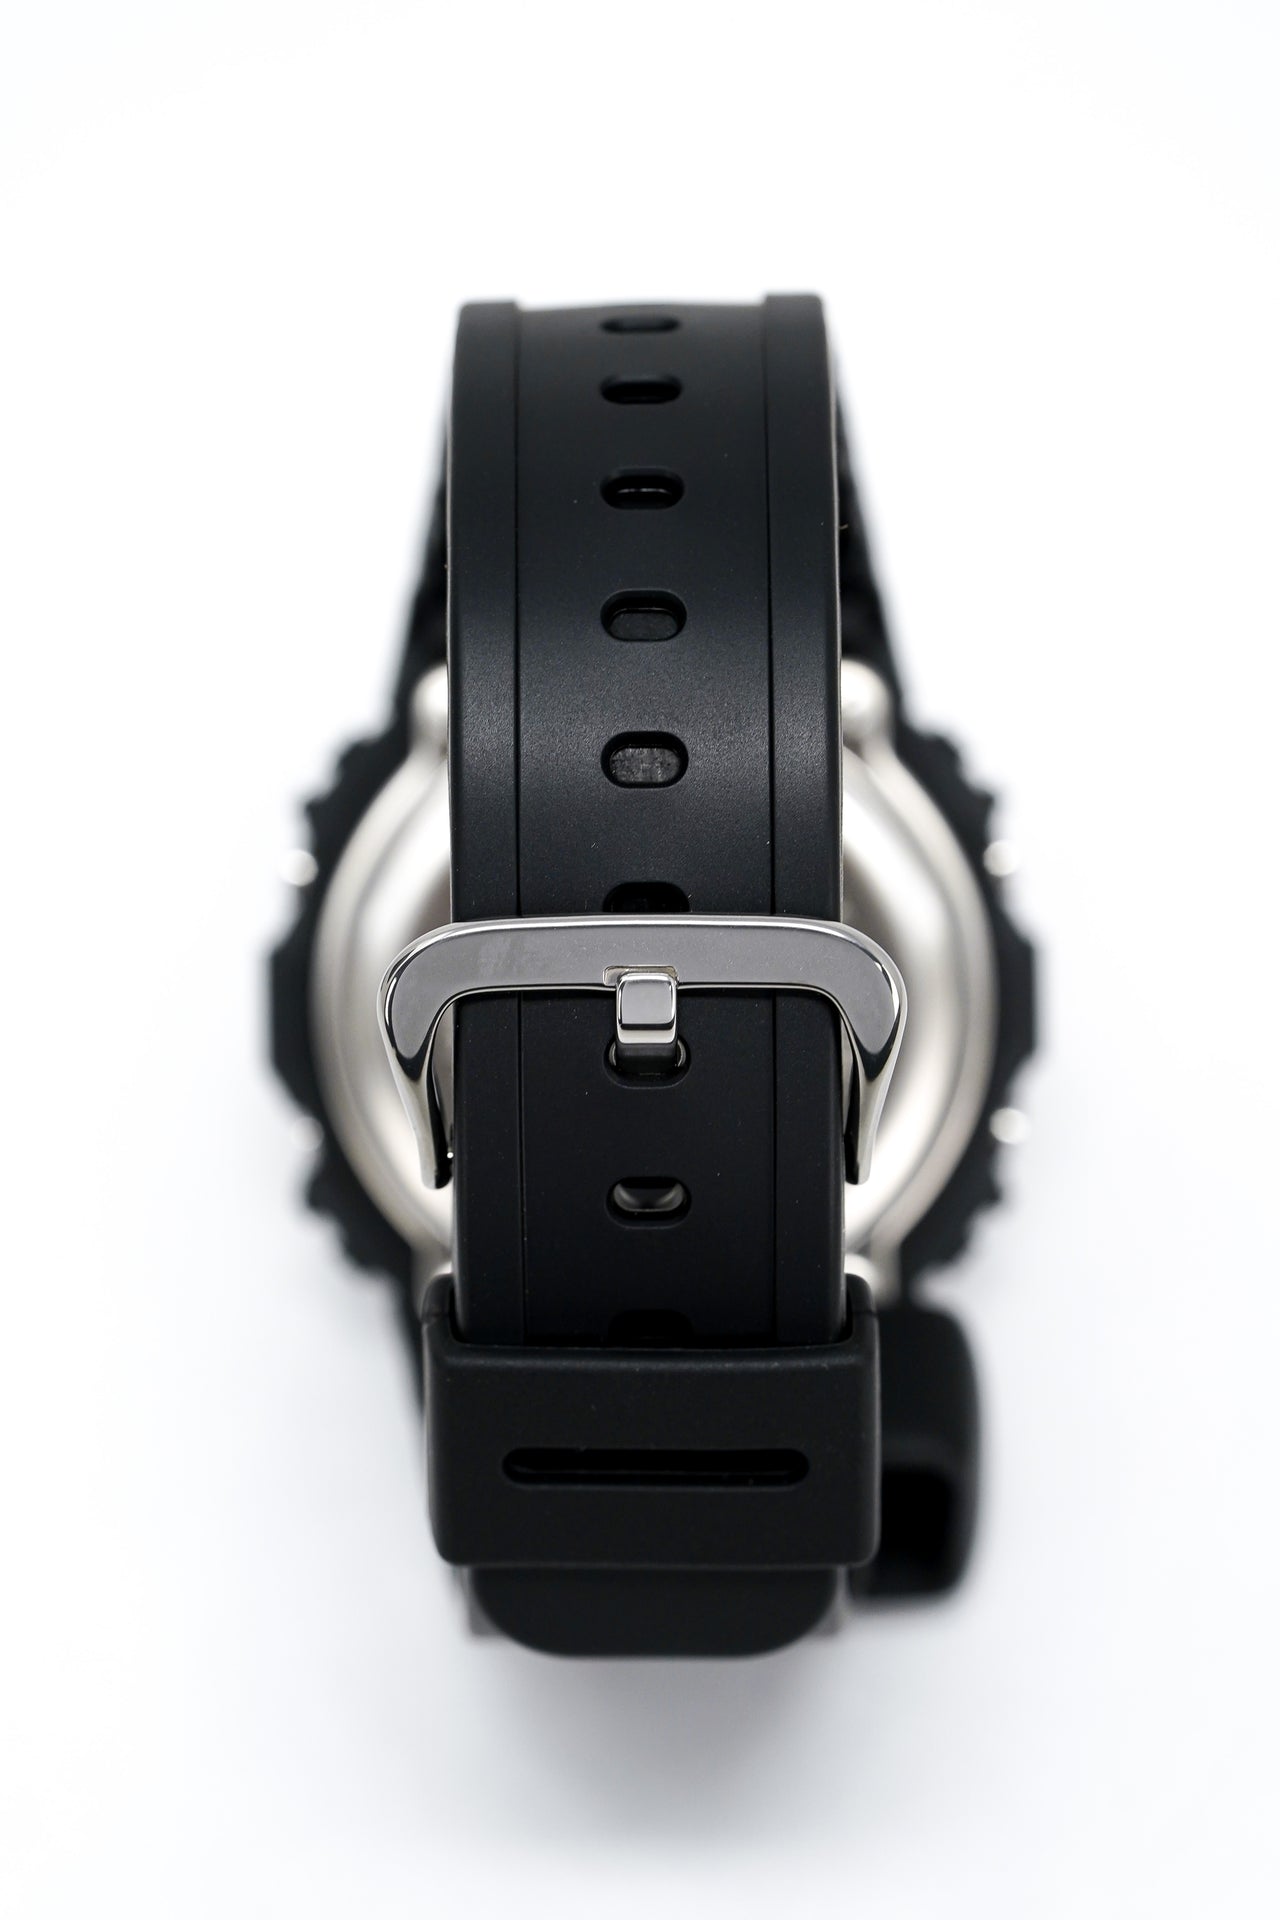 Casio G-Shock Watch Men's Classic Square Black DW-5600E-1VER